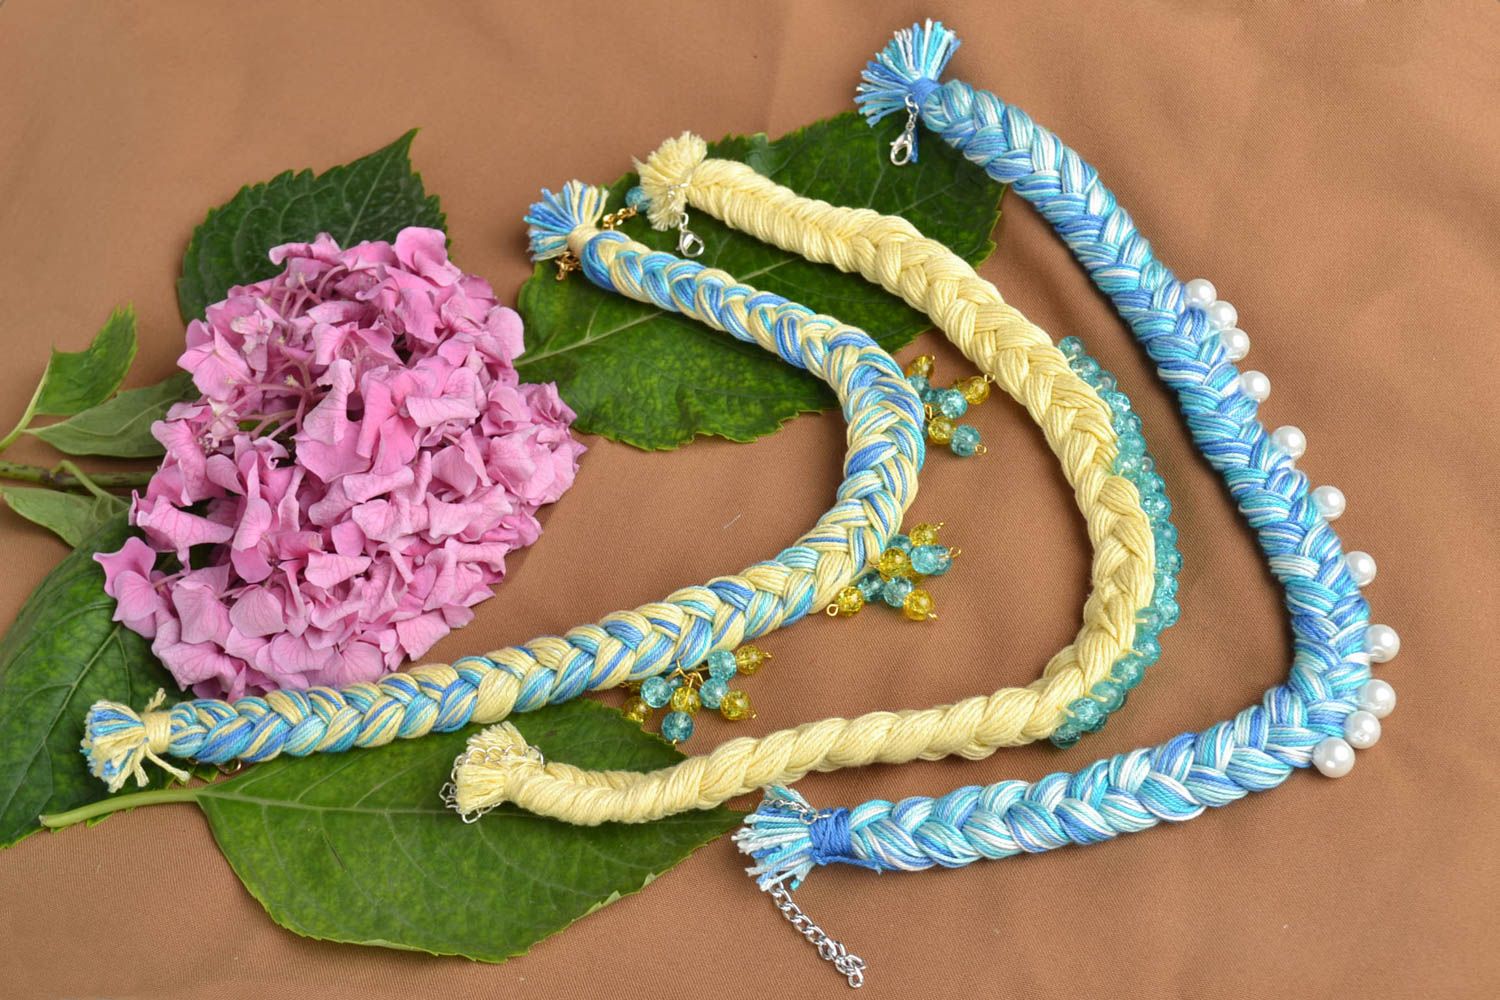 Designer bijouterie handmade necklaces made of threads fabric accessories photo 1